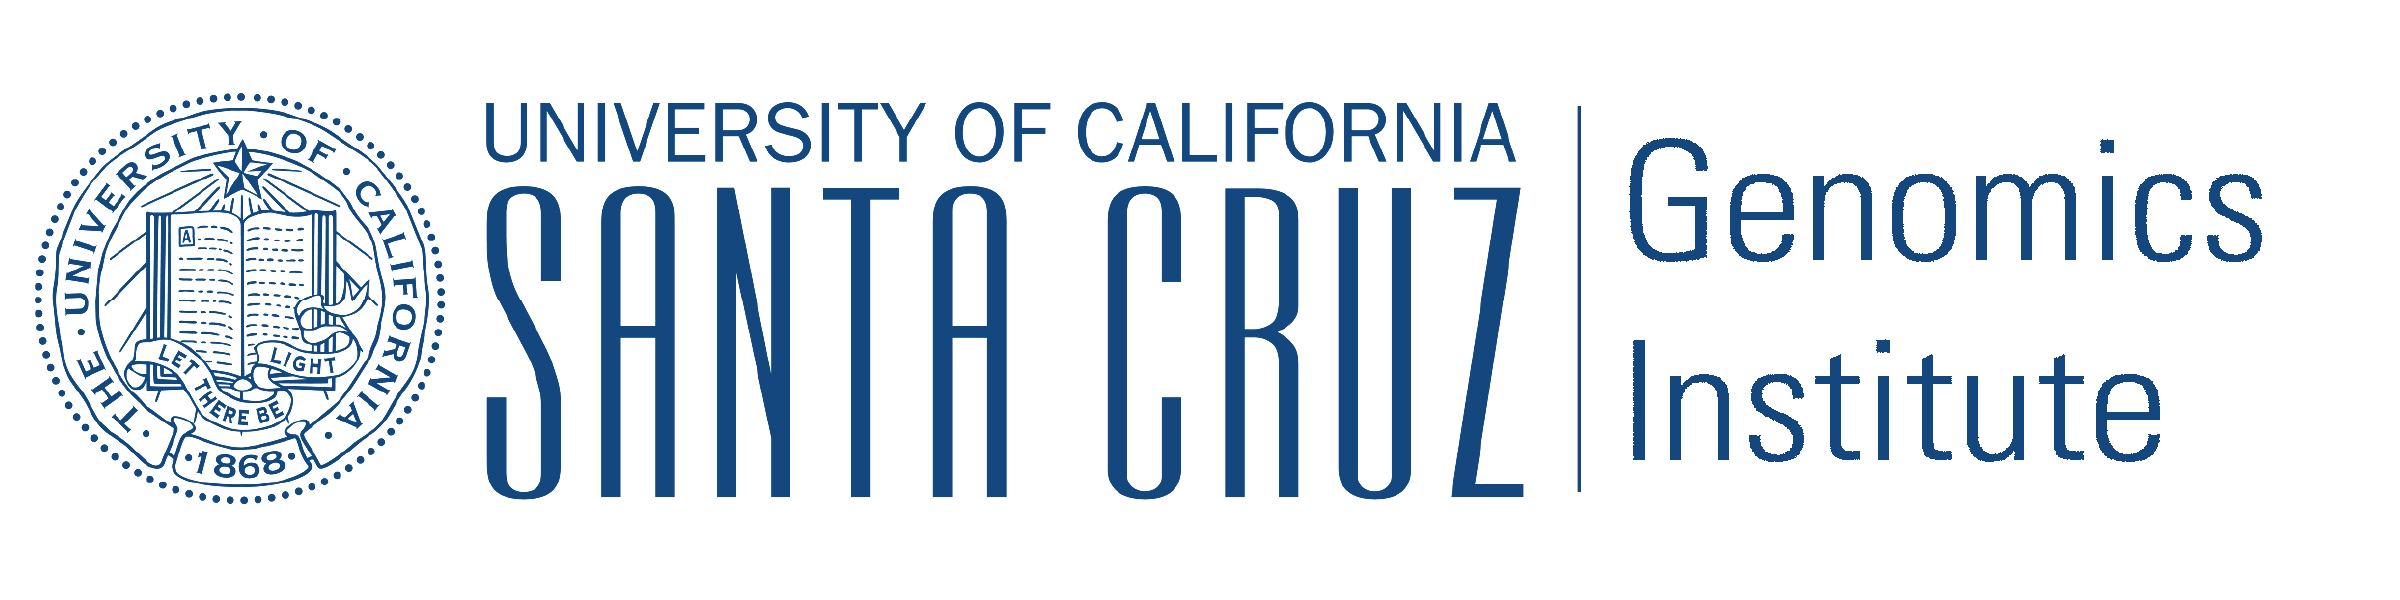 UC Santa Cruz Logo - Genomics Institute Santa Cruz